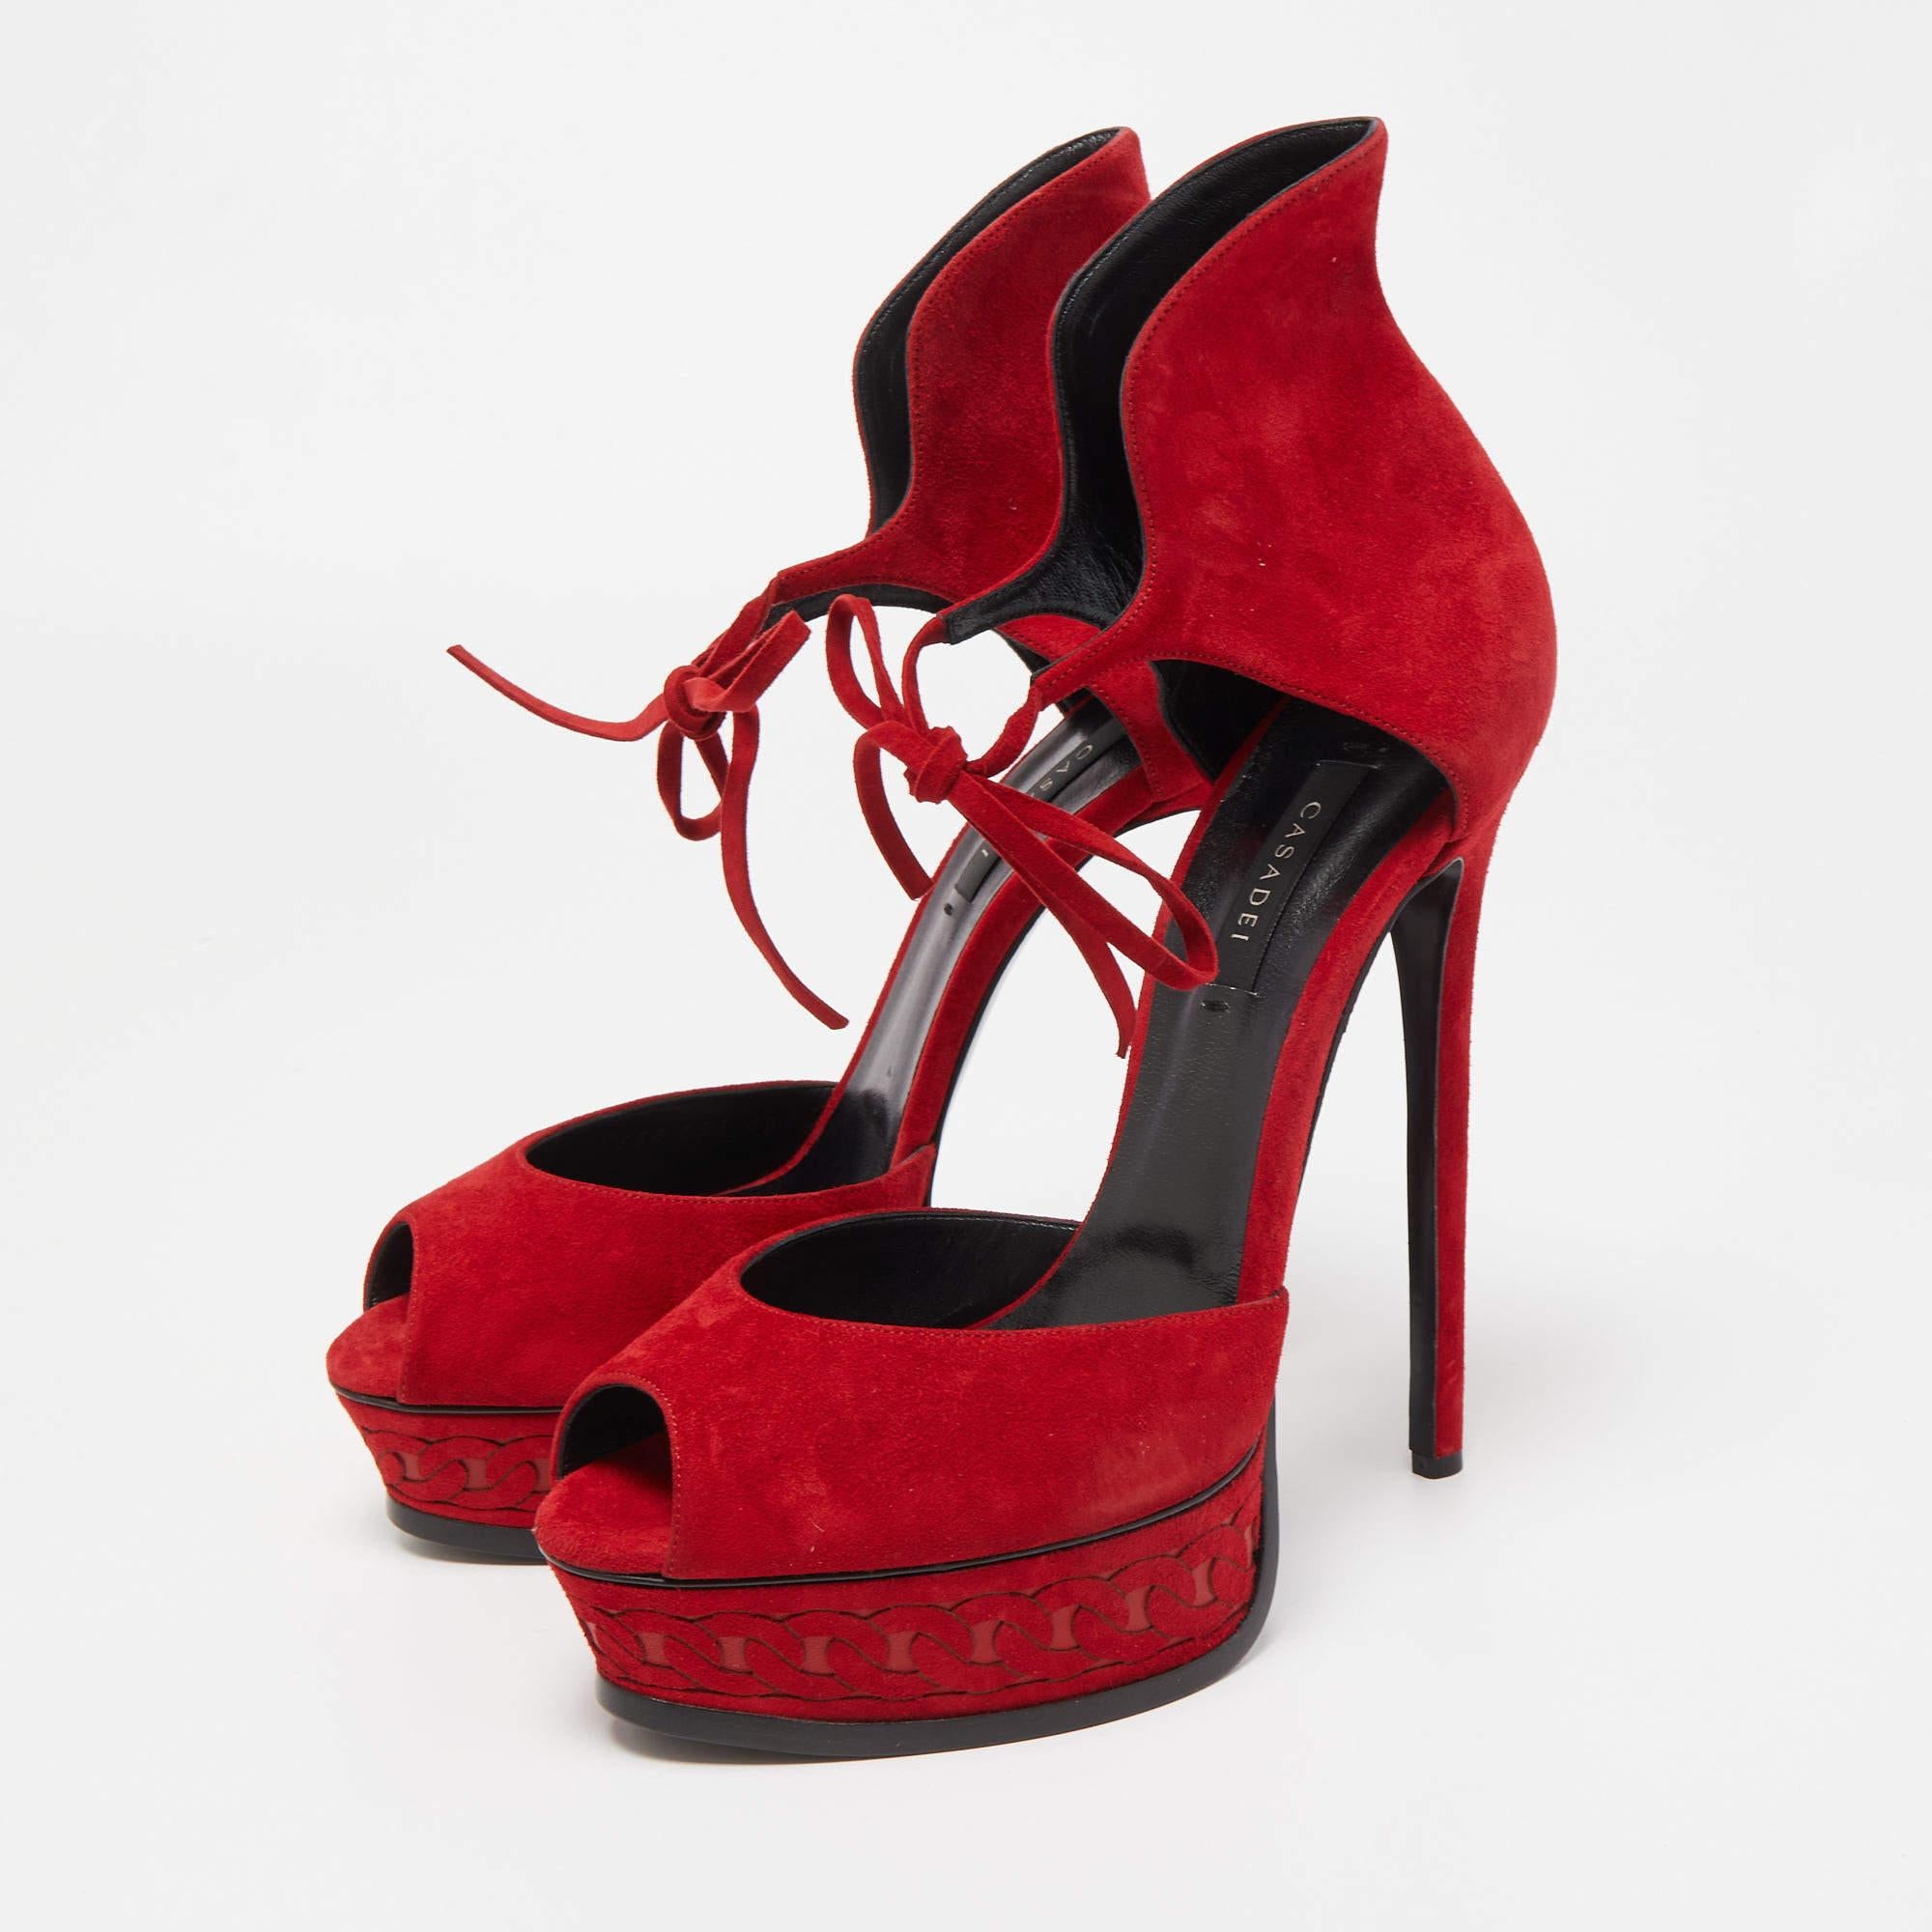 Casadei Red Suede Platform Ankle Strap Sandals Size 40 3